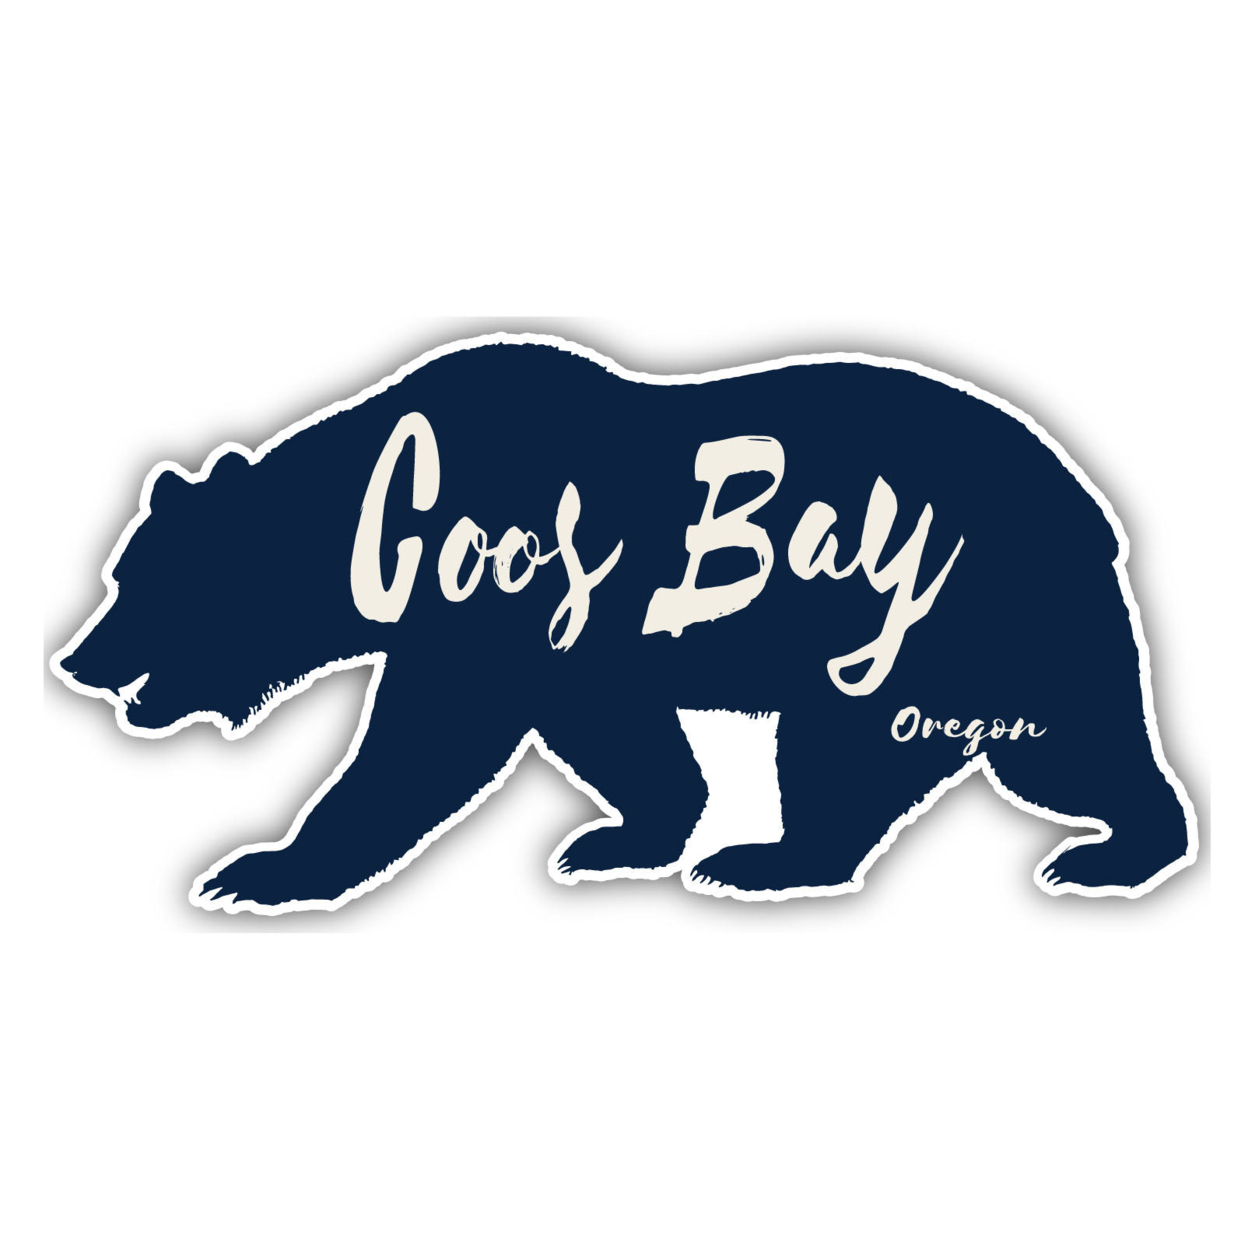 Coos Bay Oregon Souvenir Decorative Stickers (Choose Theme And Size) - Single Unit, 12-Inch, Adventures Awaits